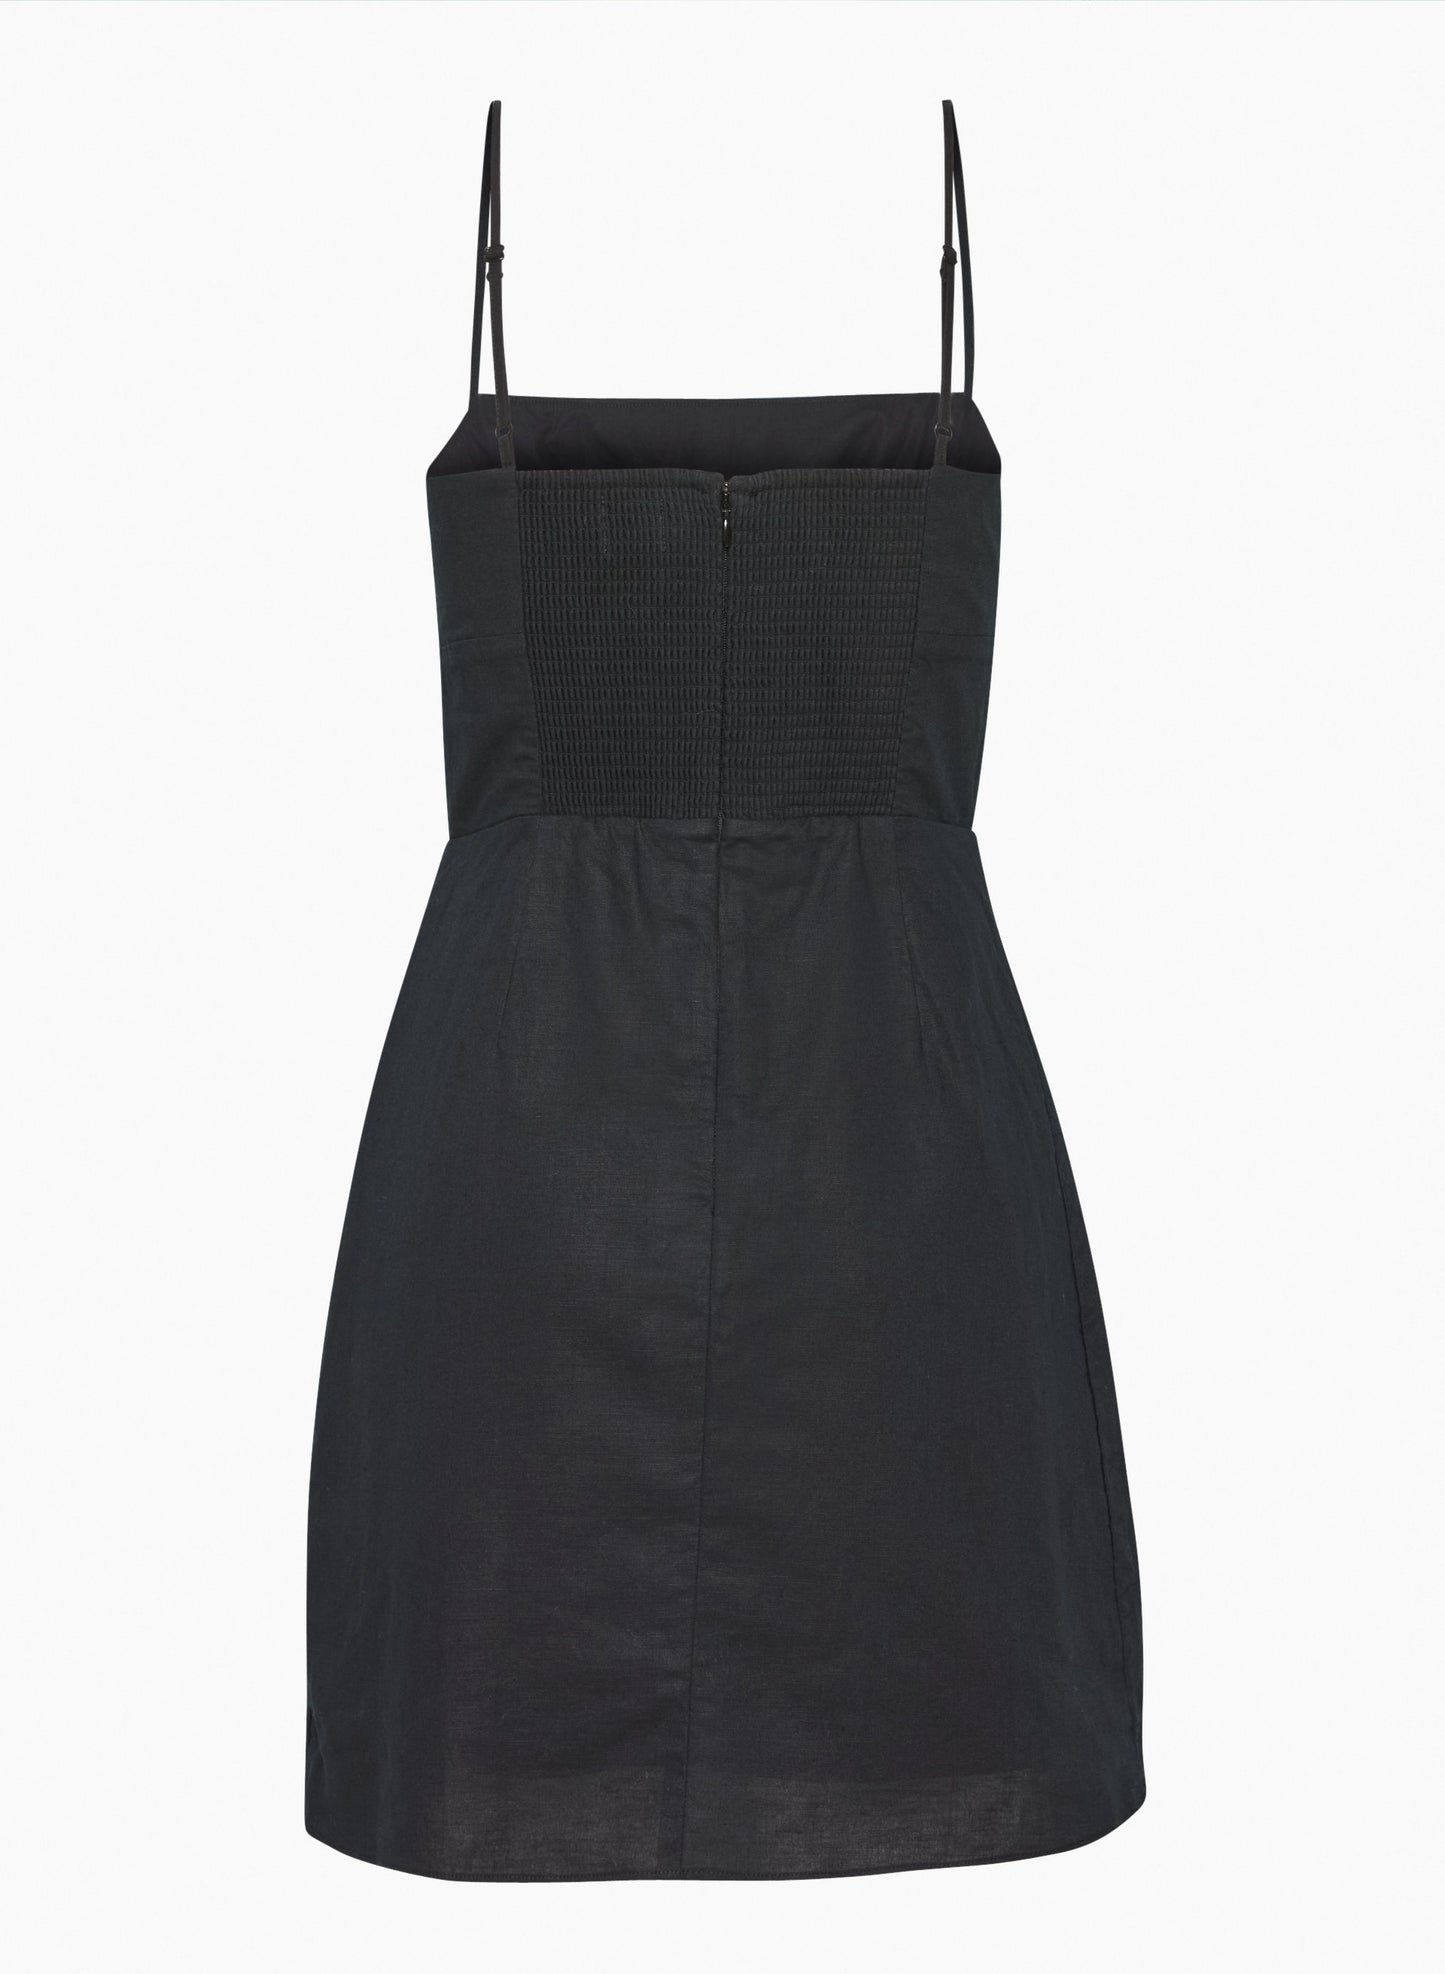 Sunday Best Quaint Black Linen Organic Cotton Mini Dress - XS